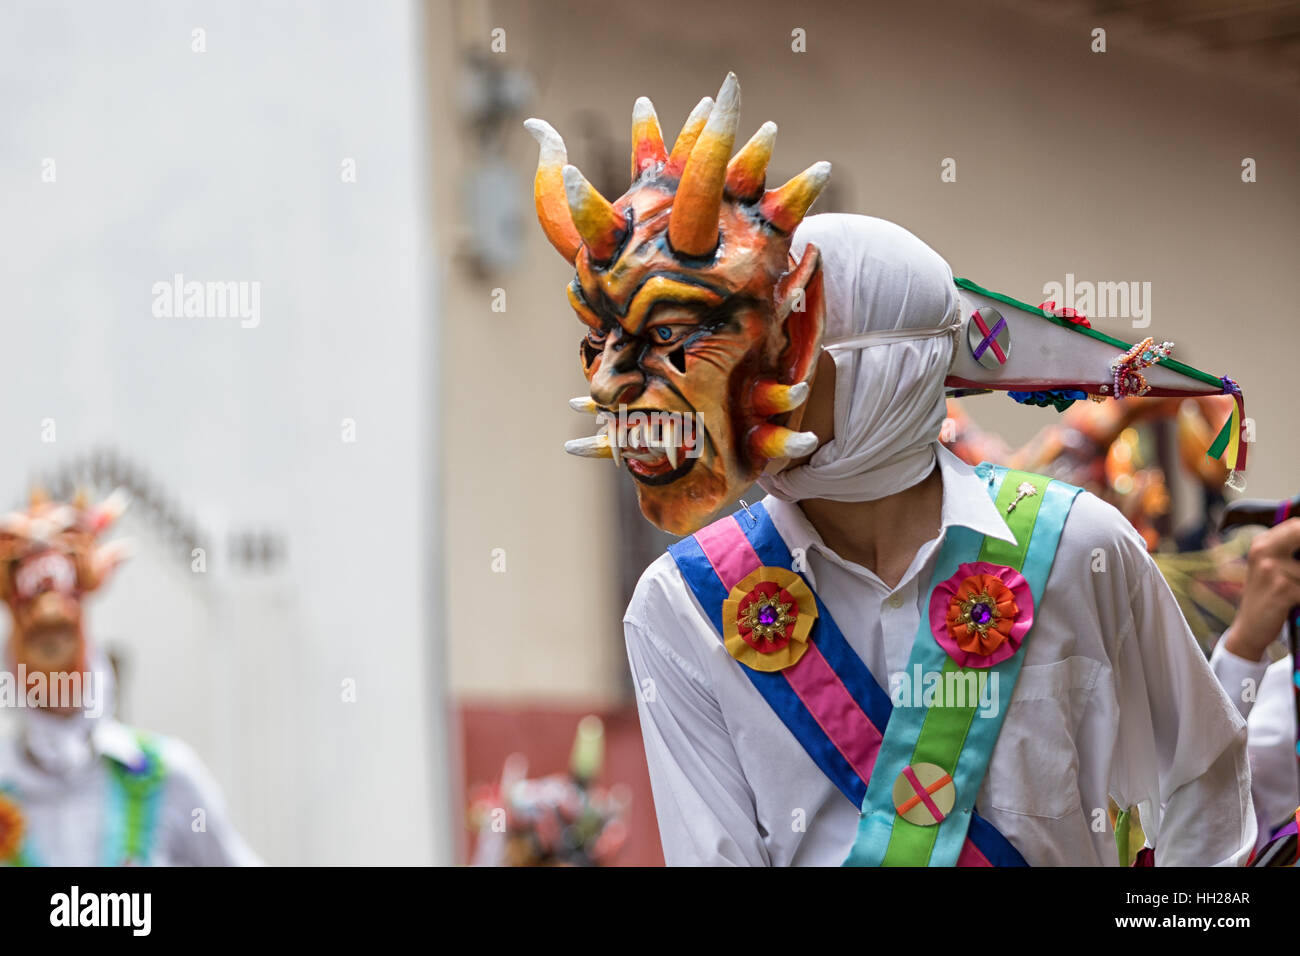 May 25, La Villa de los Santos, Panama: men wearing colorful traditional mask and clothing during Corpus Cristi celebration Stock Photo